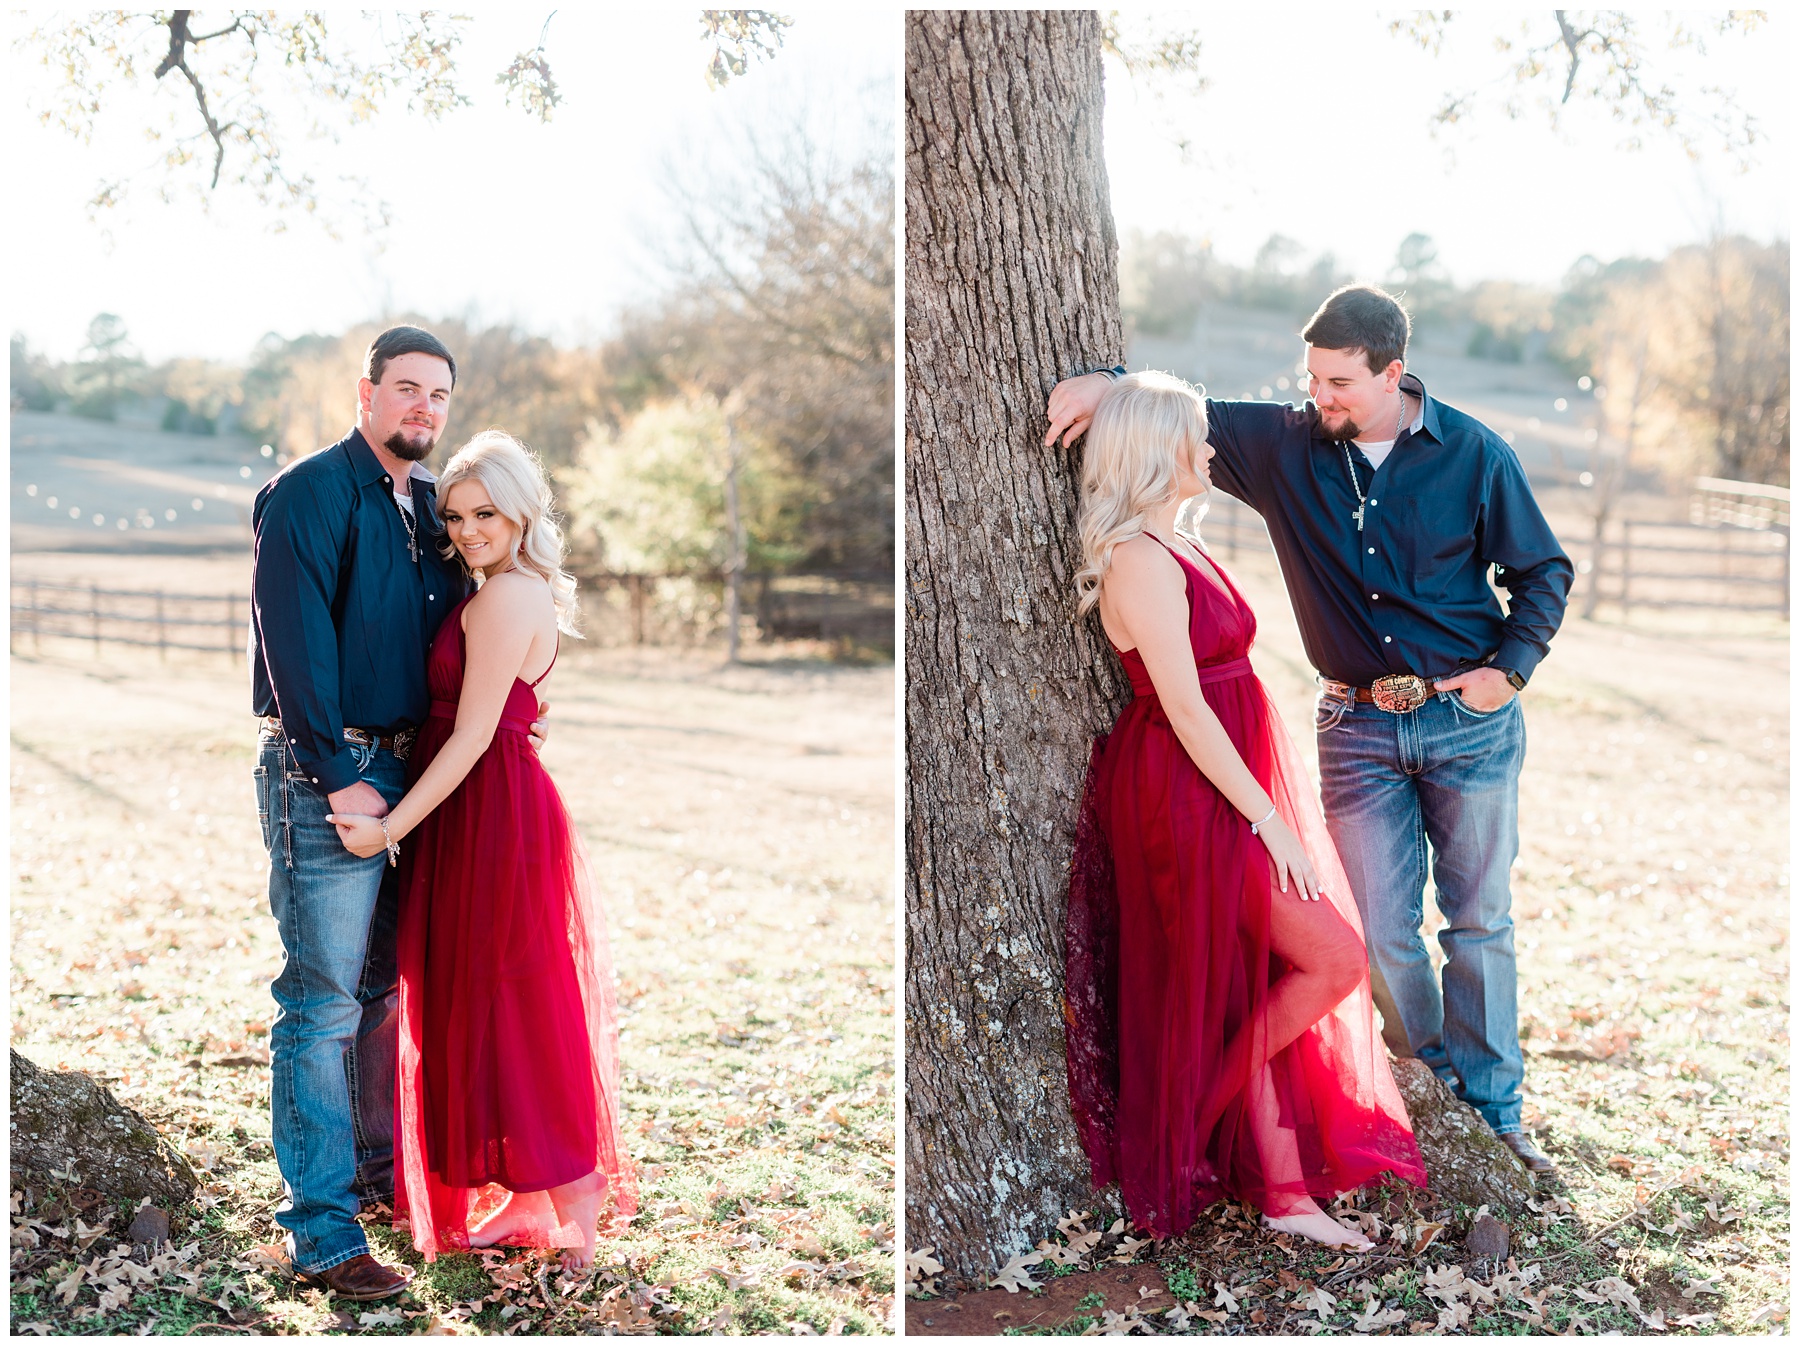 Beautiful Flowing Dress | Five Oaks Cabin Engagement Session LaRue TX by East Texas Wedding Photographer Karina Danielle